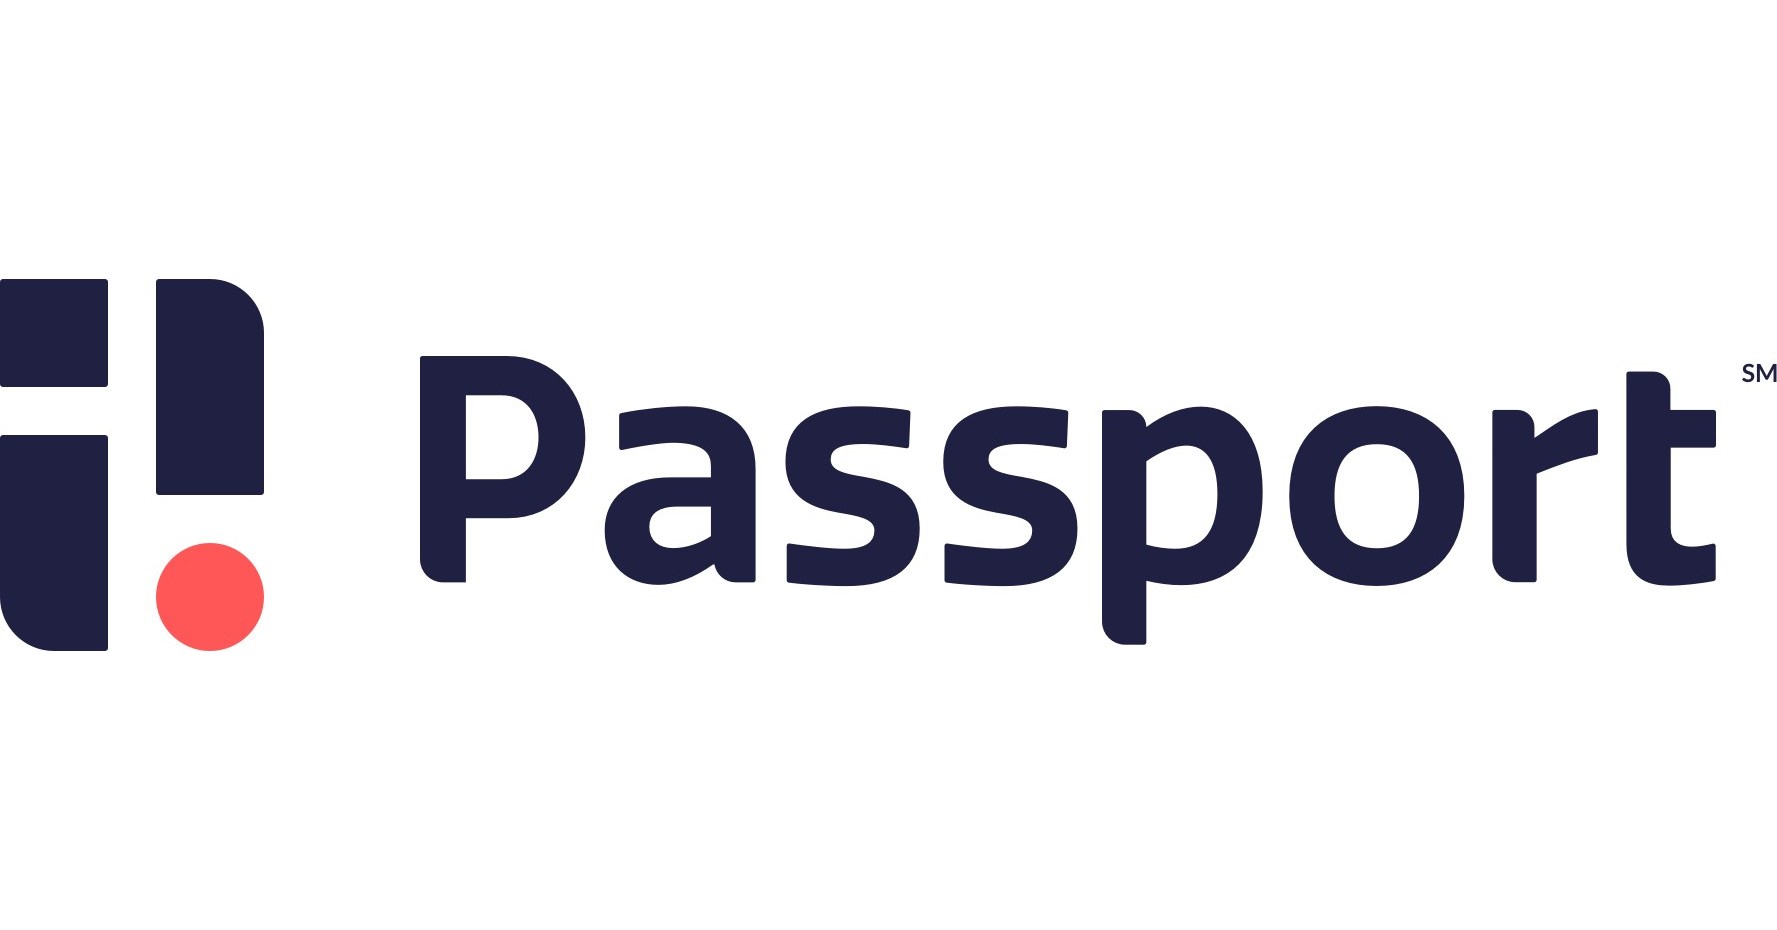 Passport Parking App in Use Across Eastern Massachusetts